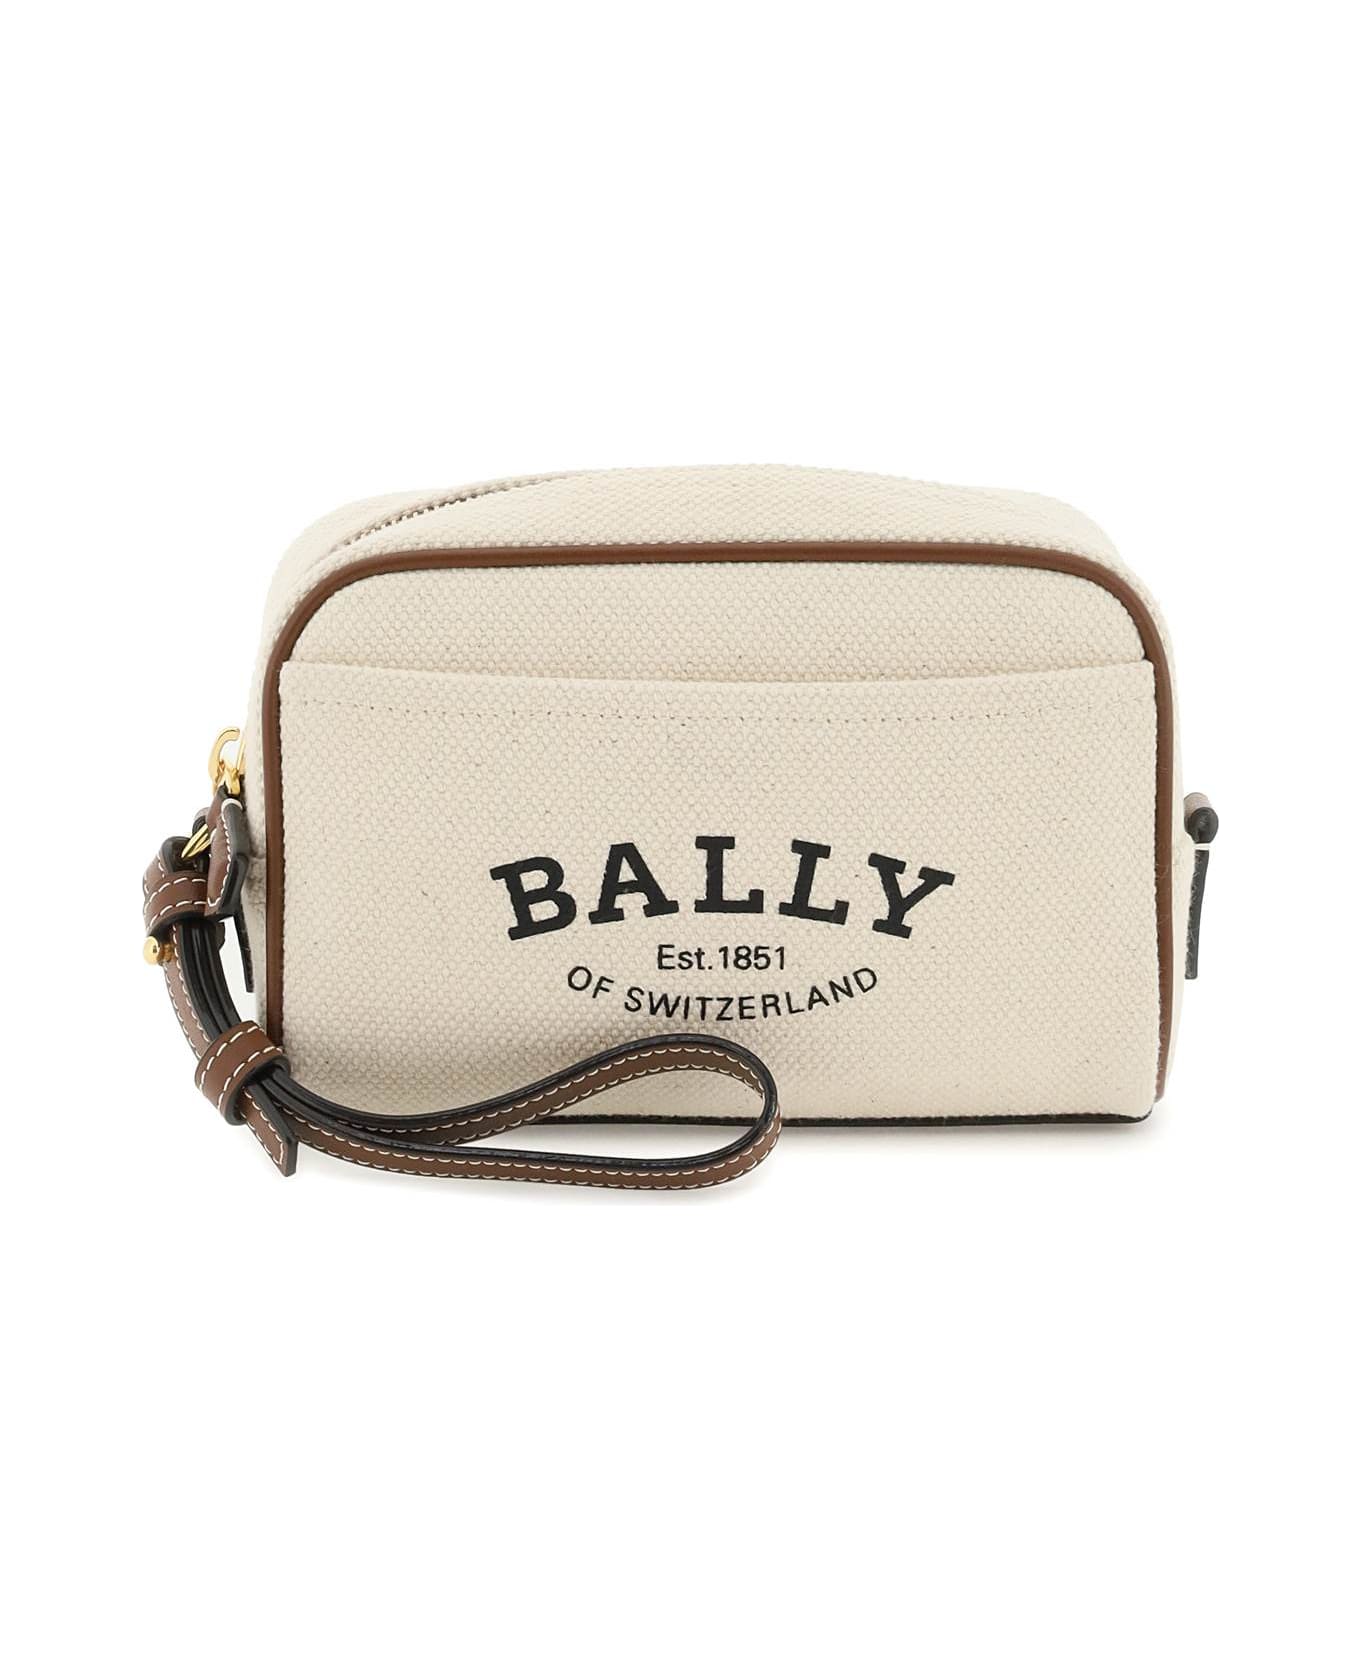 Bally 'cedy' Pouch Bag - NATURAL CUERO OVIBR (Beige)